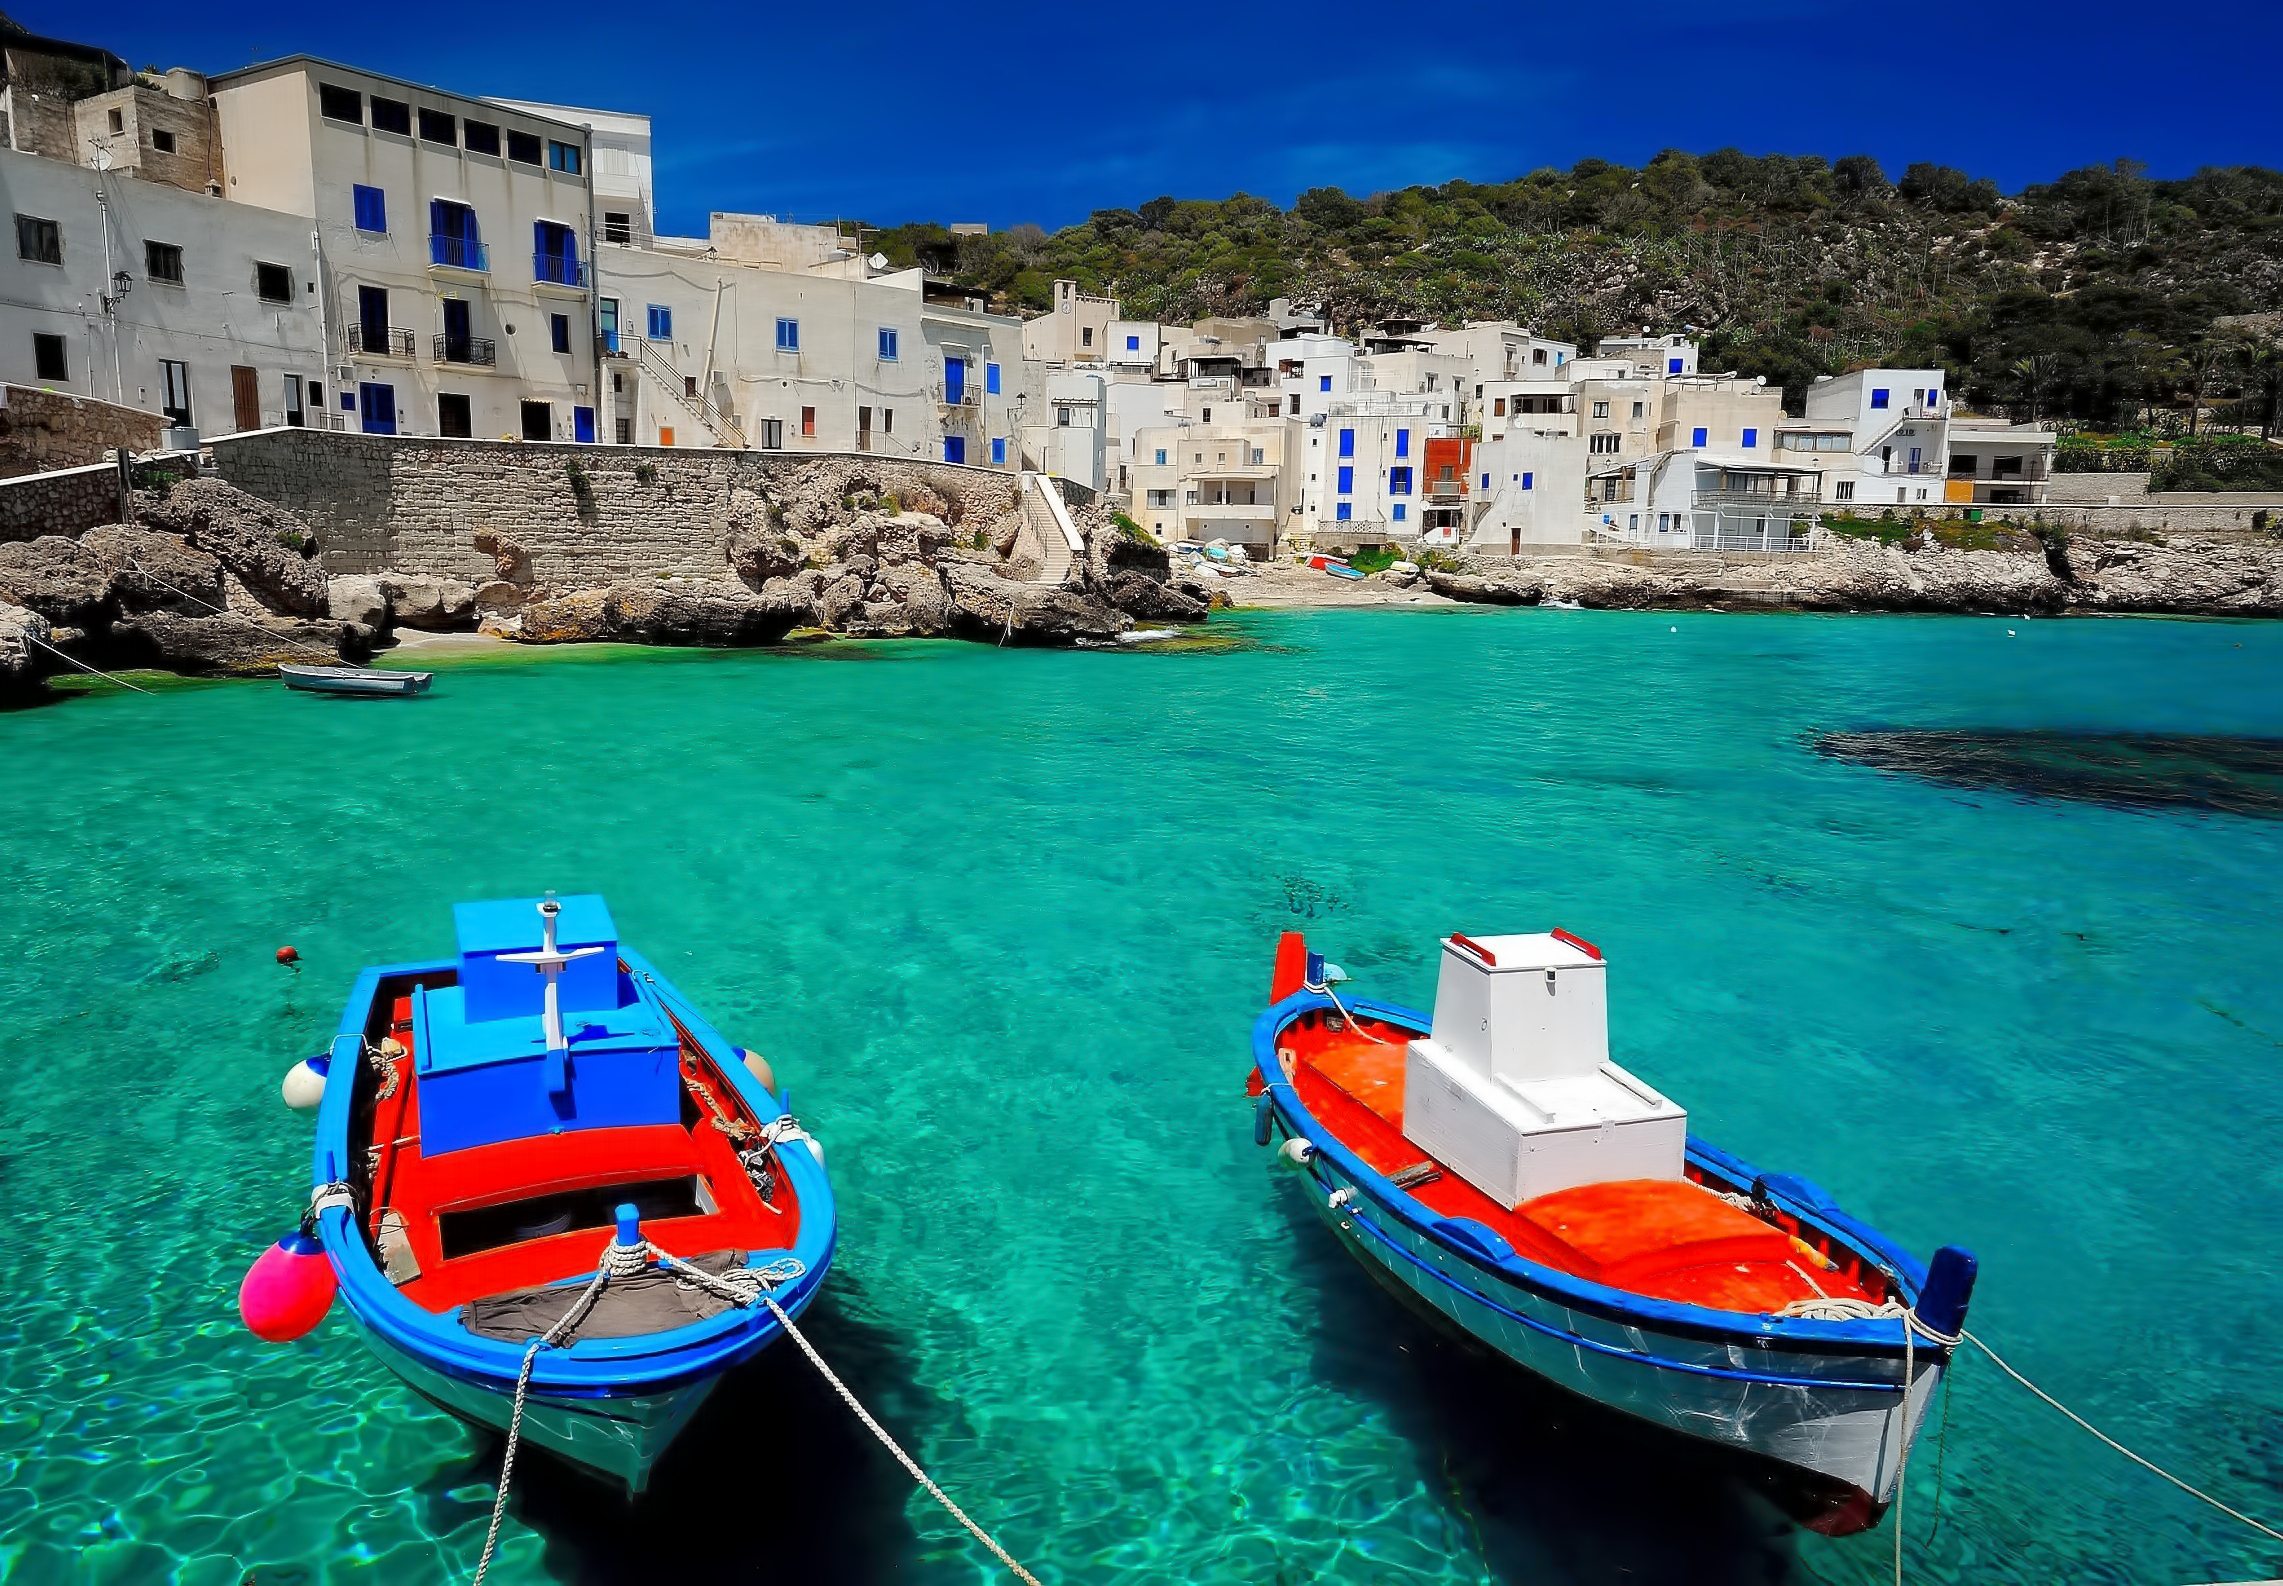 Glimpses of Sicily...